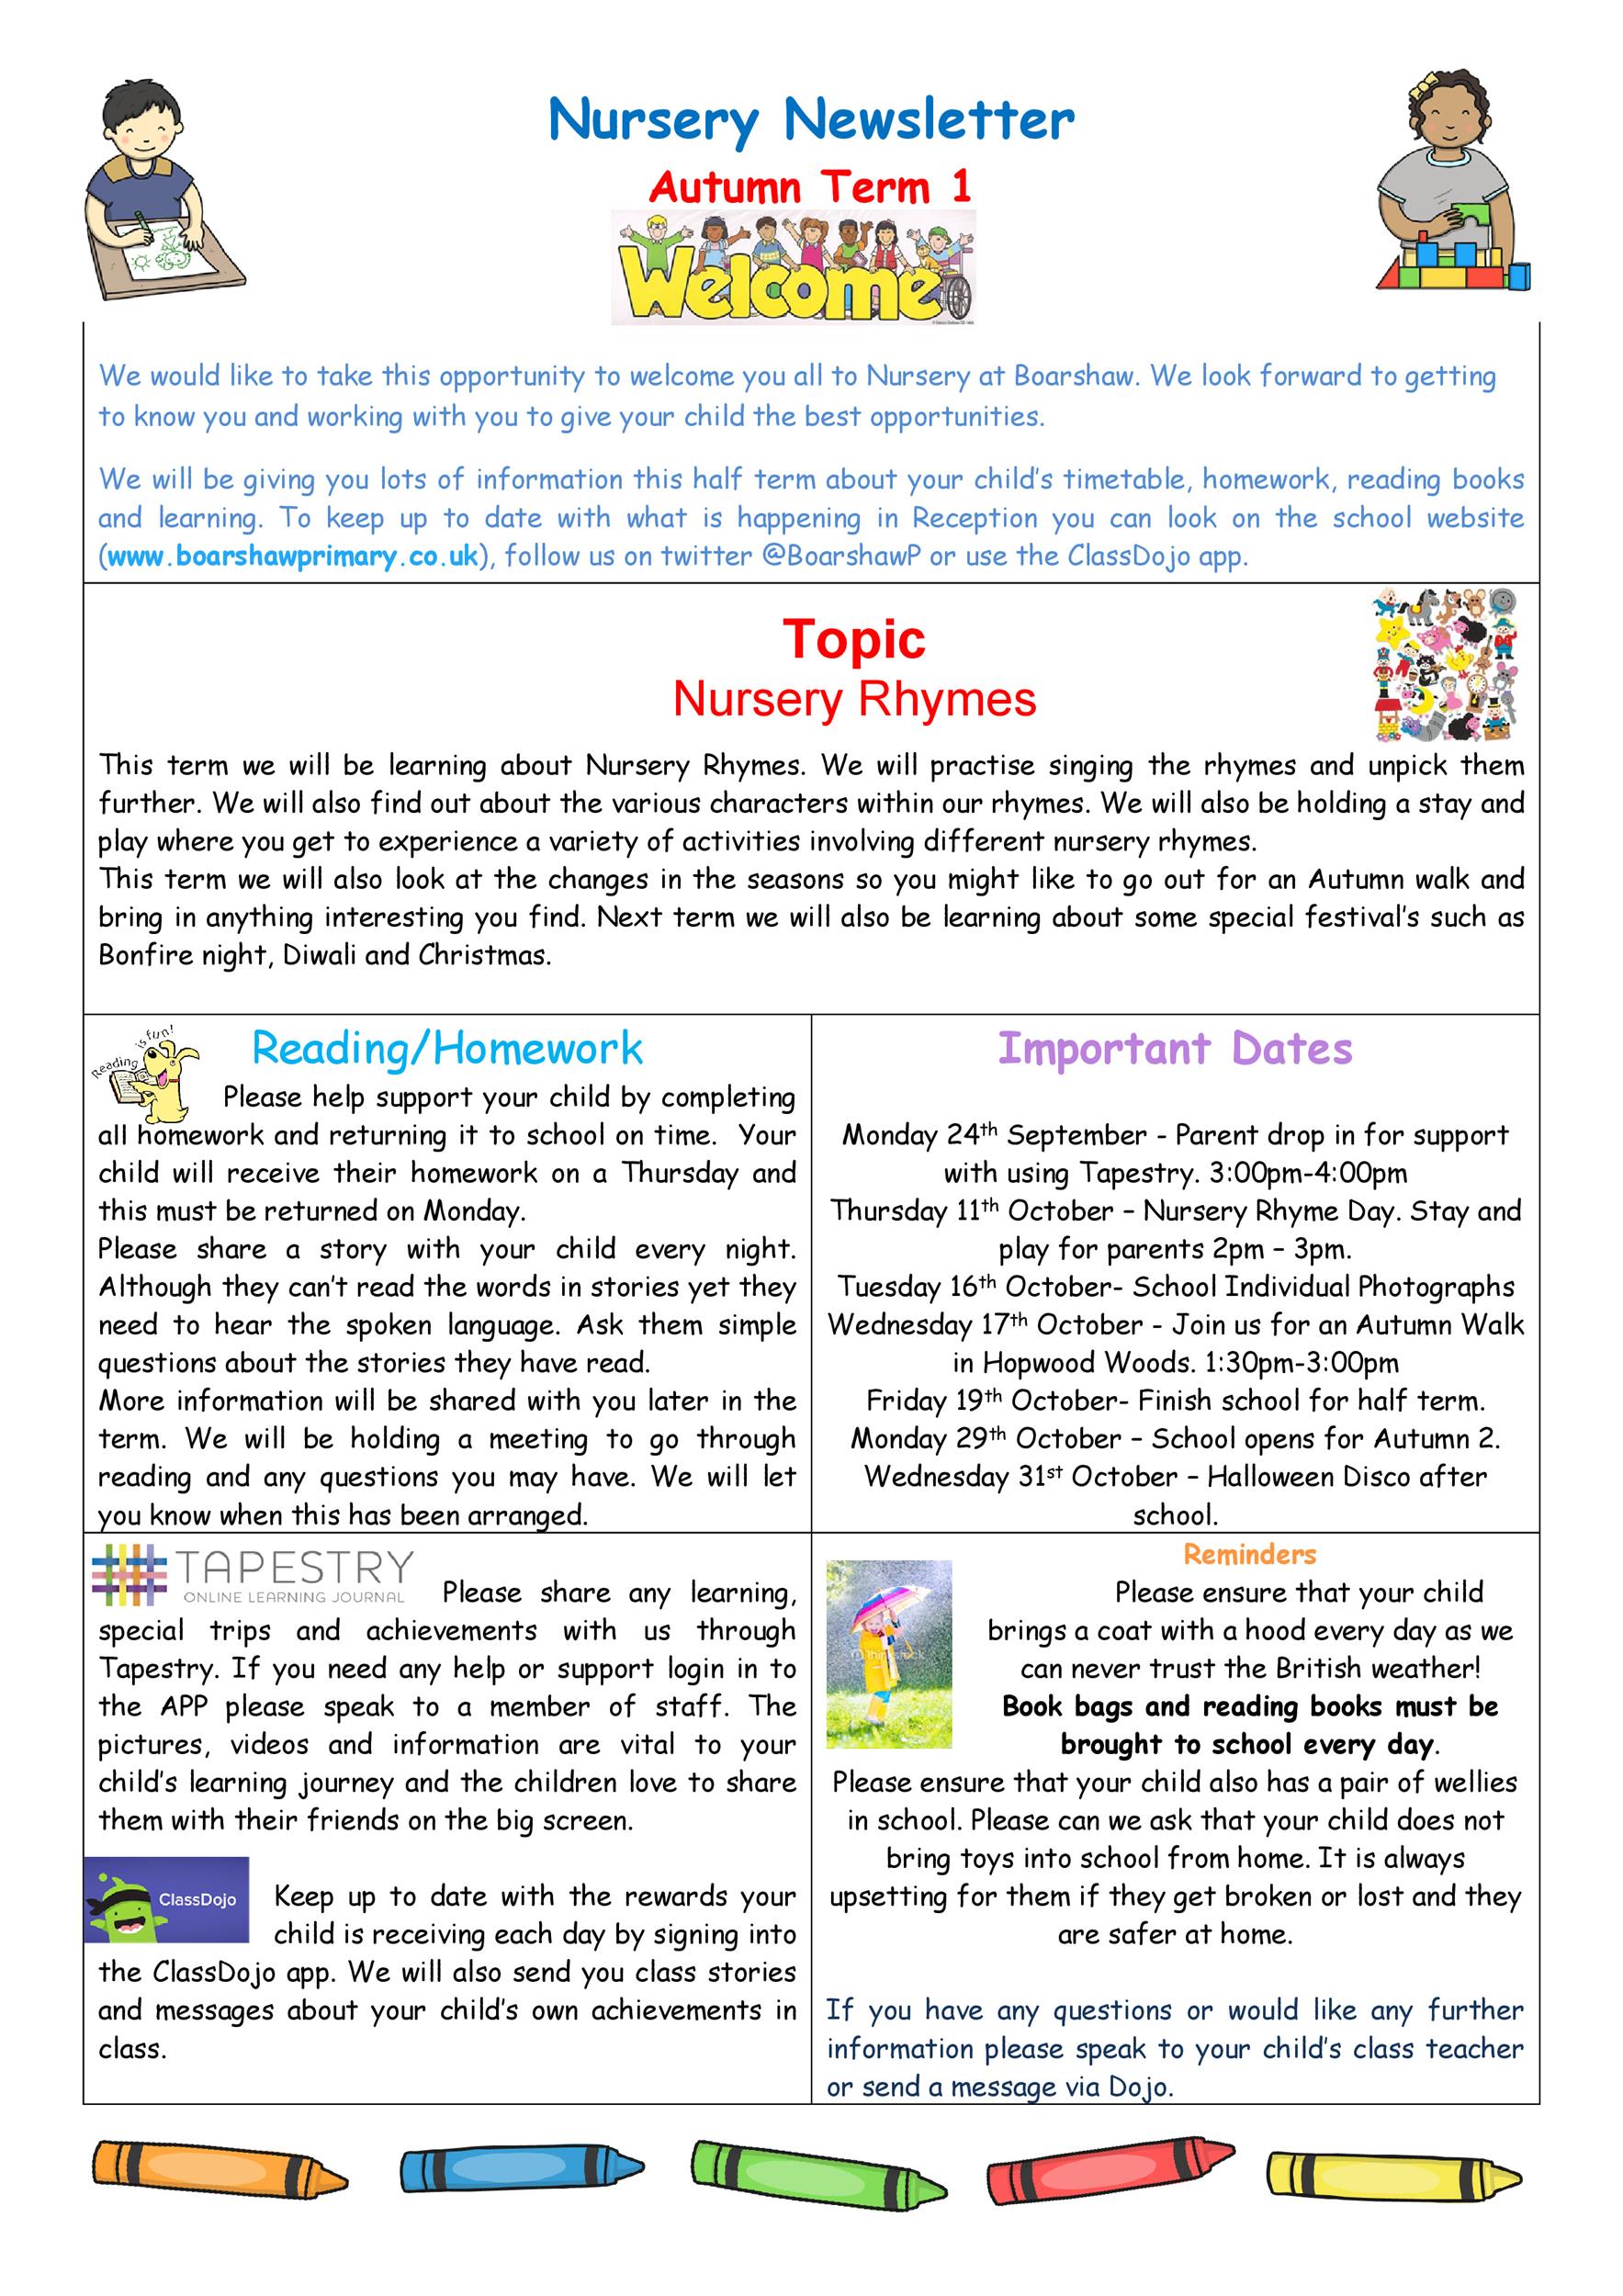 50 Creative Preschool Newsletter Templates (+Tips) ᐅ TemplateLab